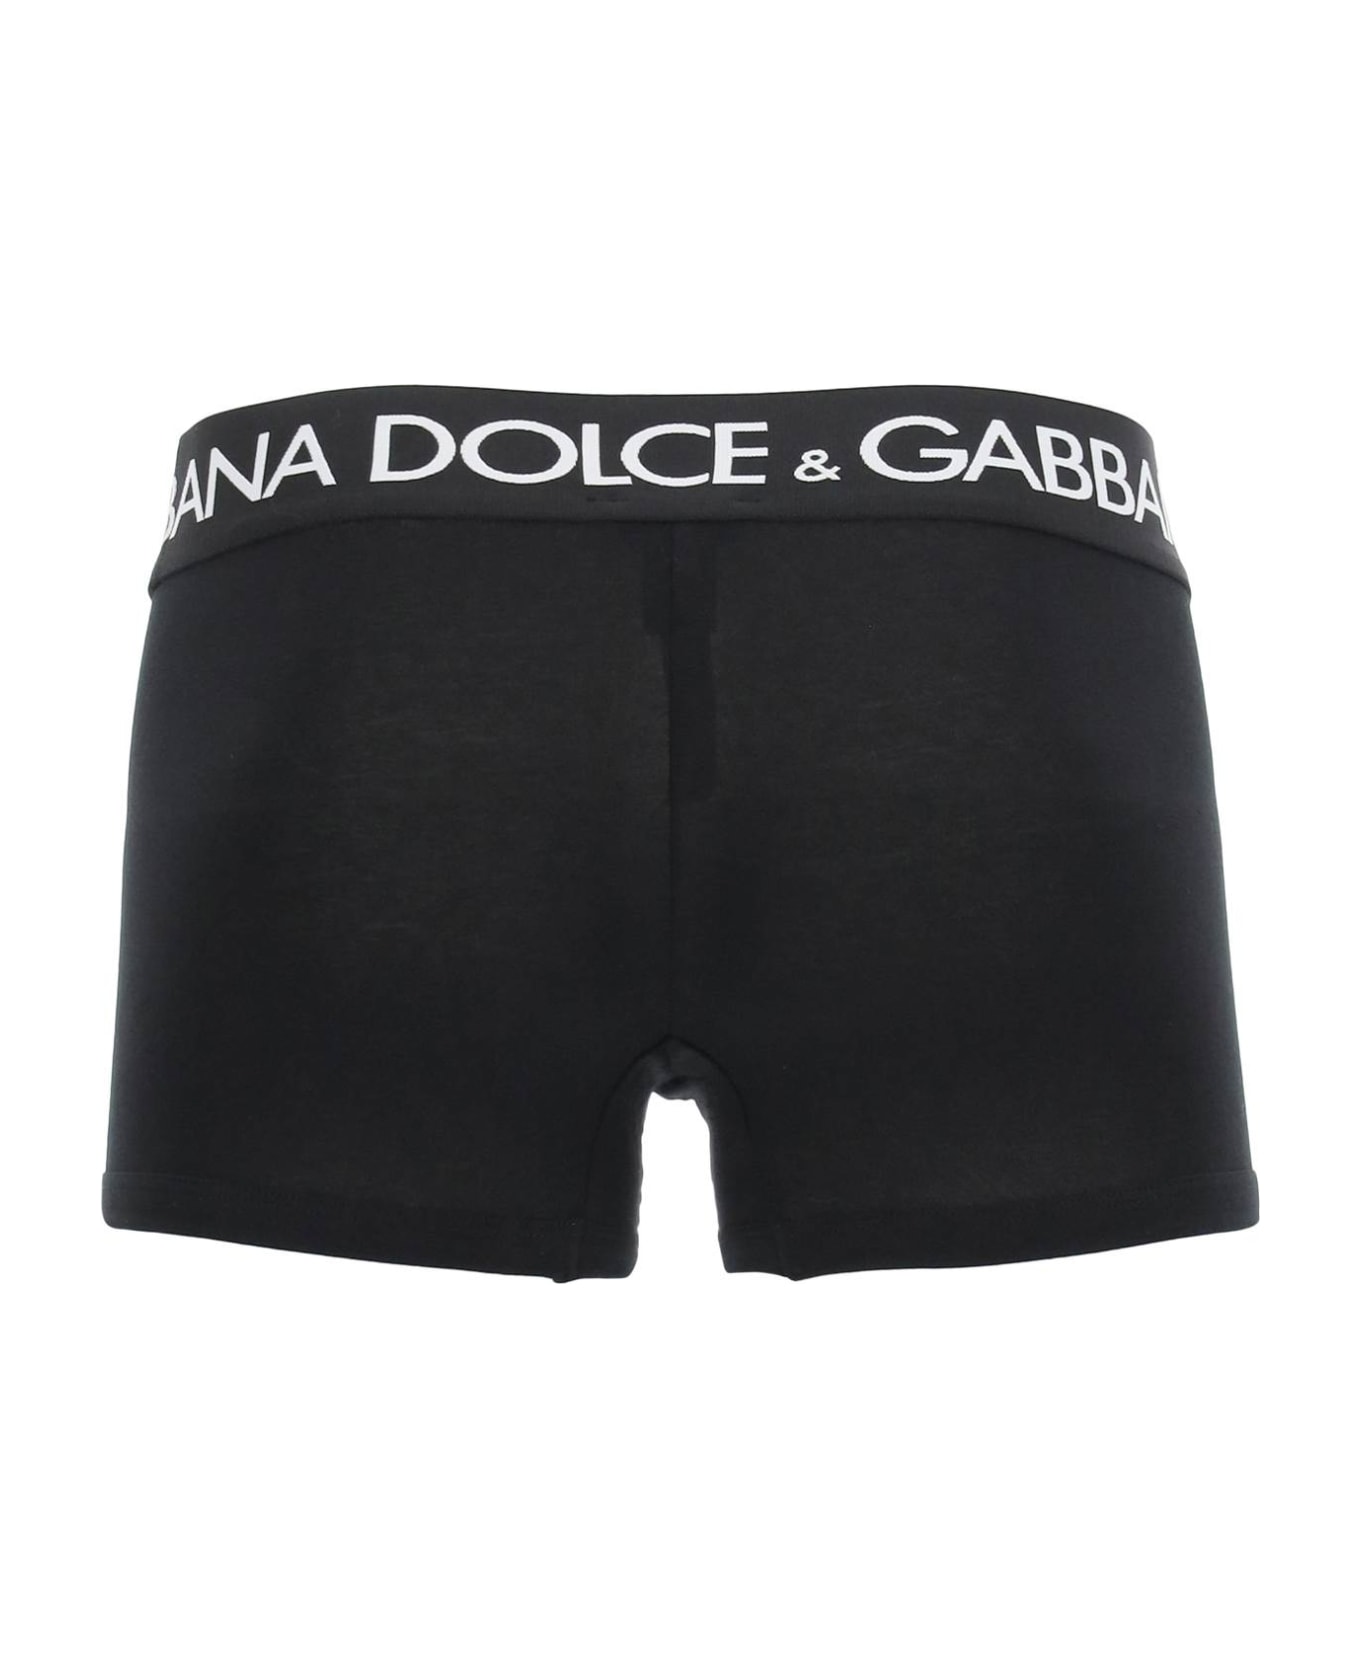 Dolce & Gabbana Bi-pack Underwear Boxer - NERO (Black) スイムトランクス